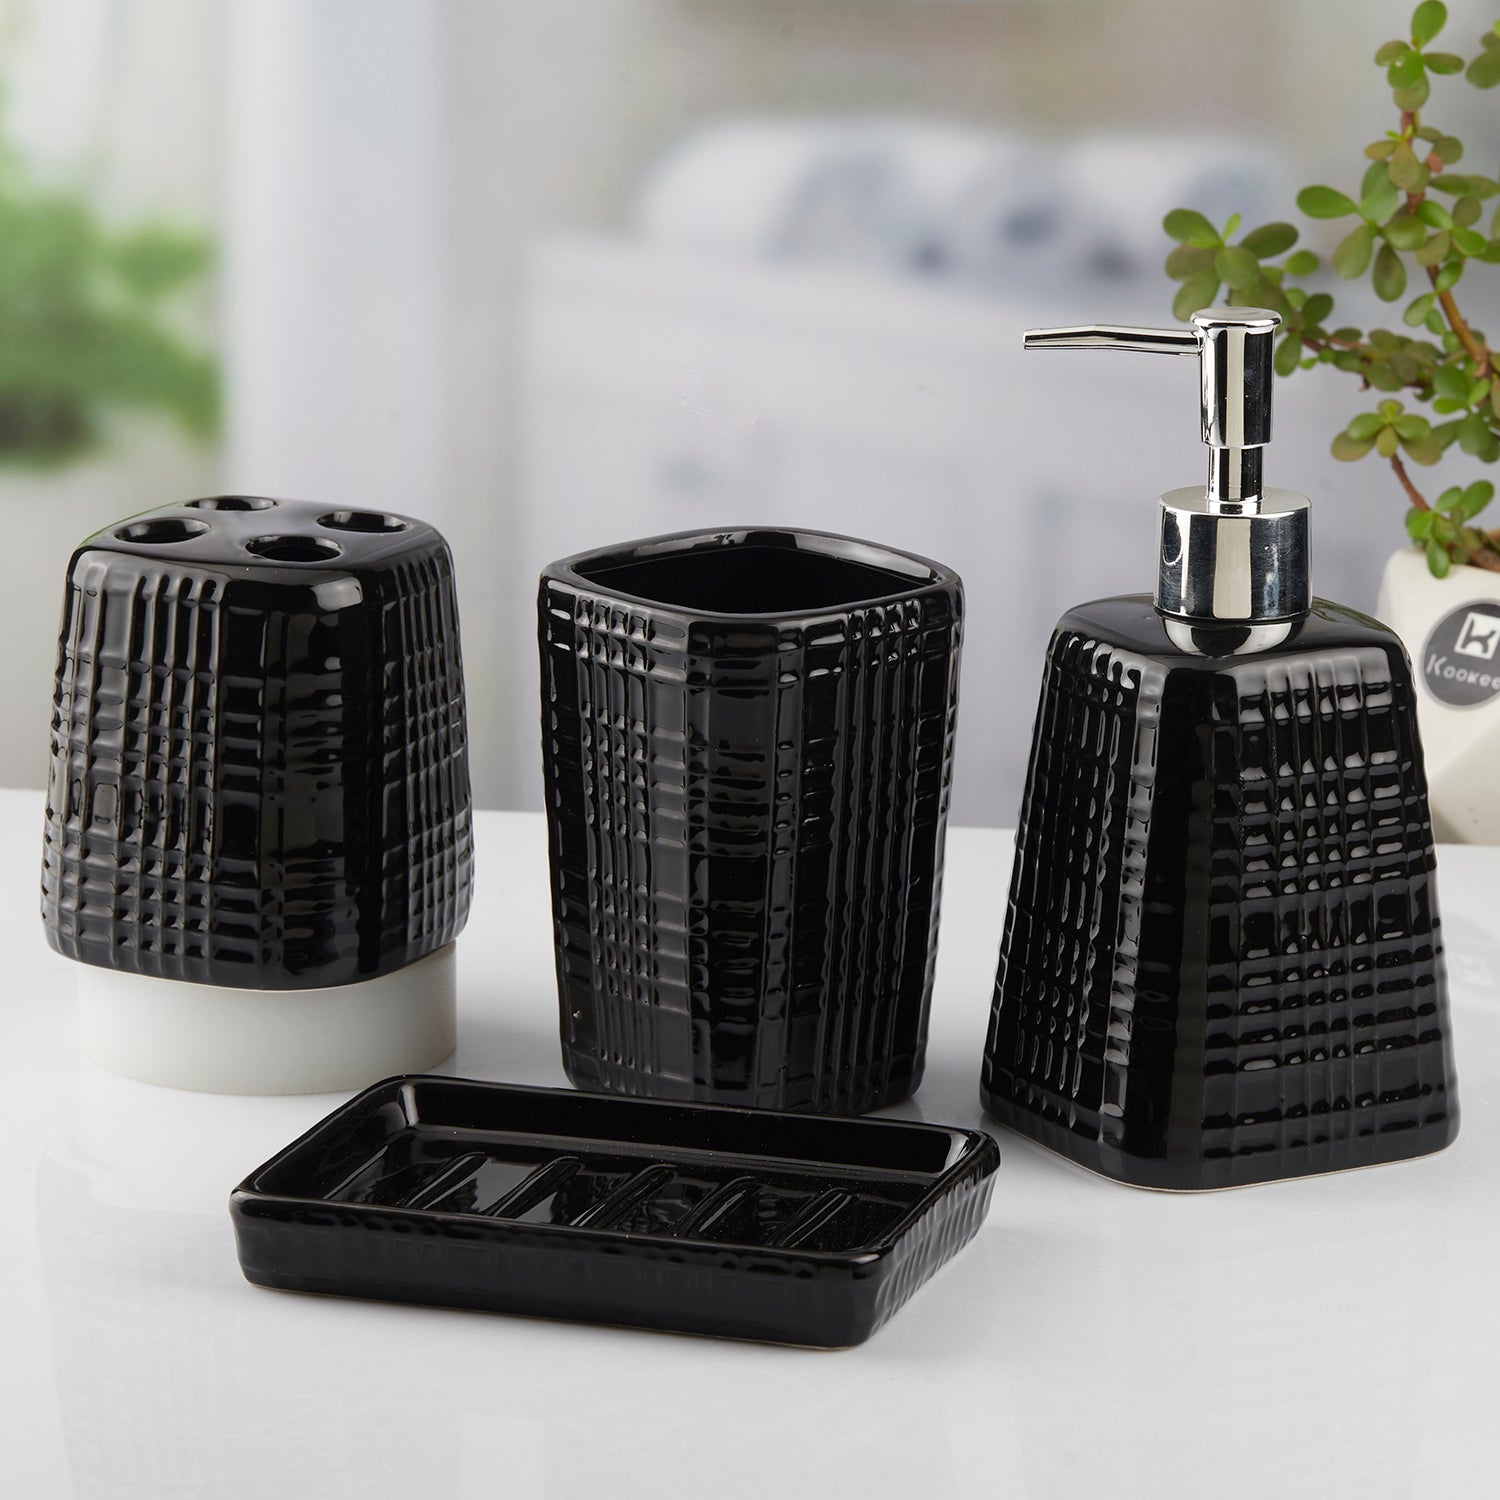 Ceramic Bathroom Set of 4 with Soap Dispenser (10467)